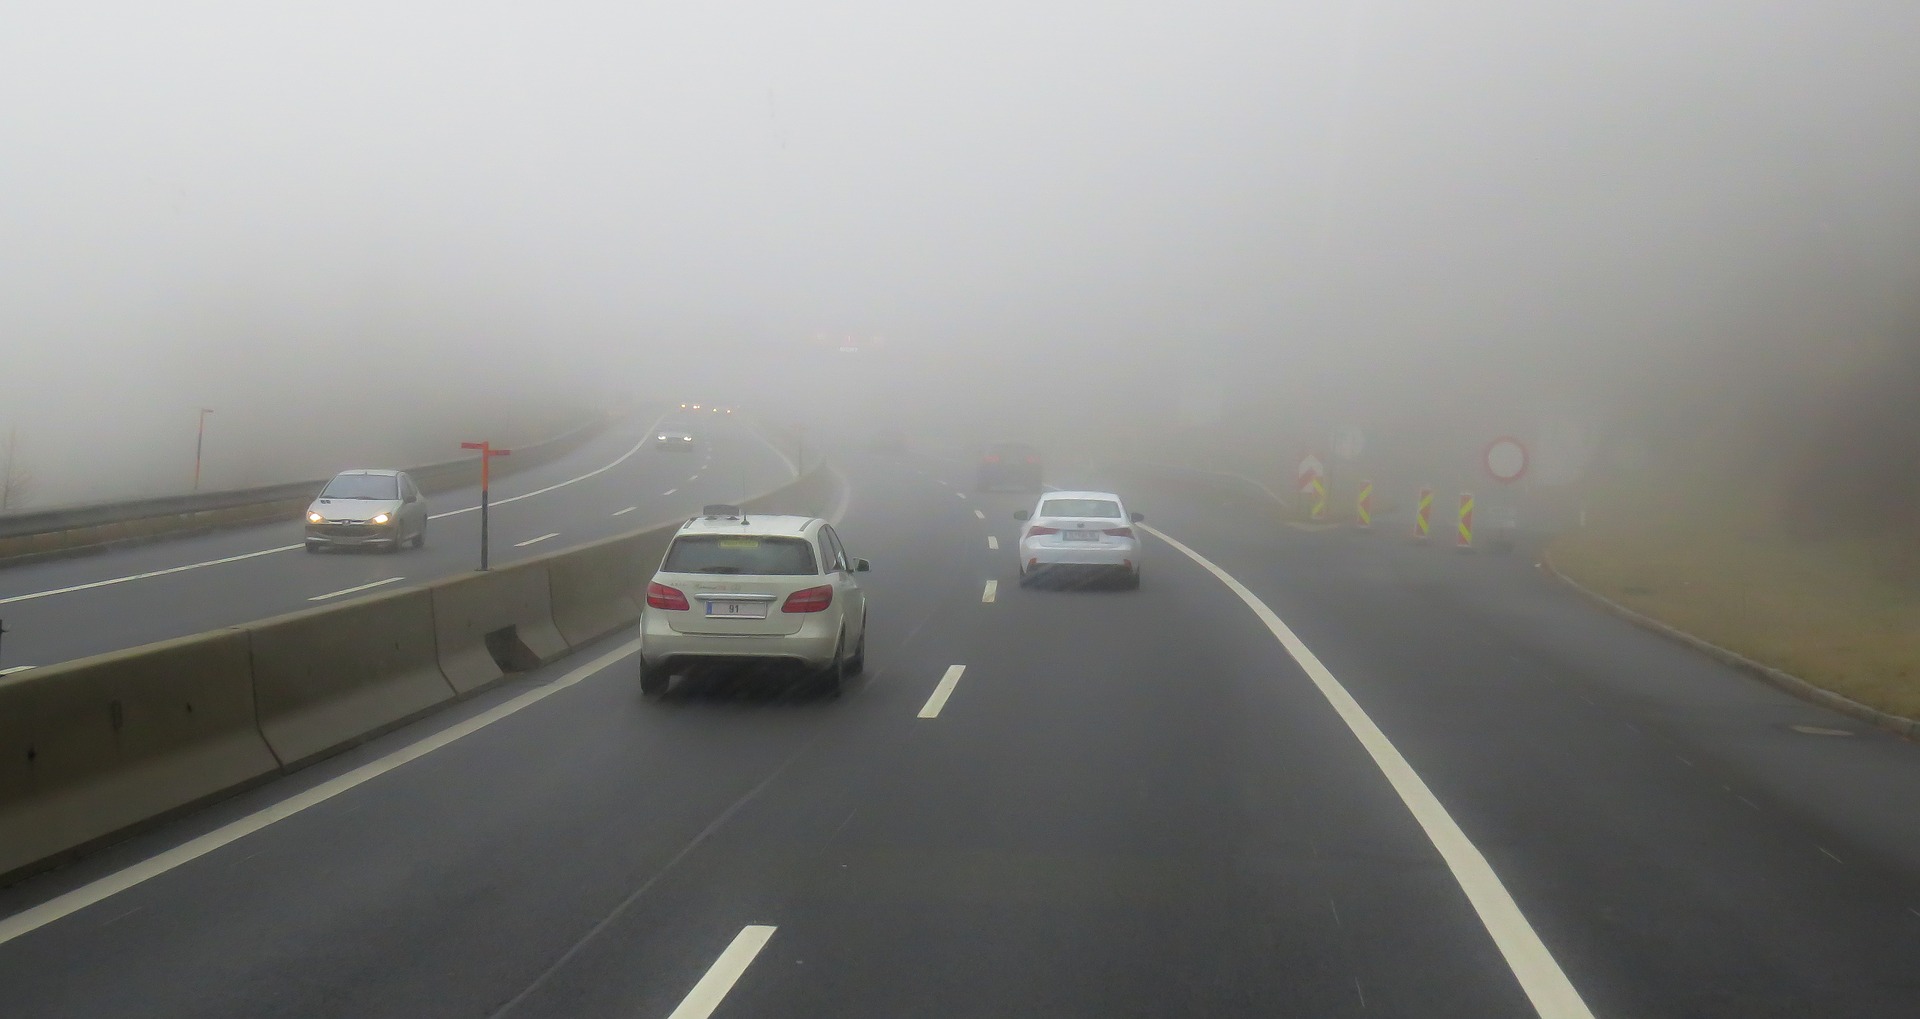 Dense fog on the road - Drive carefully